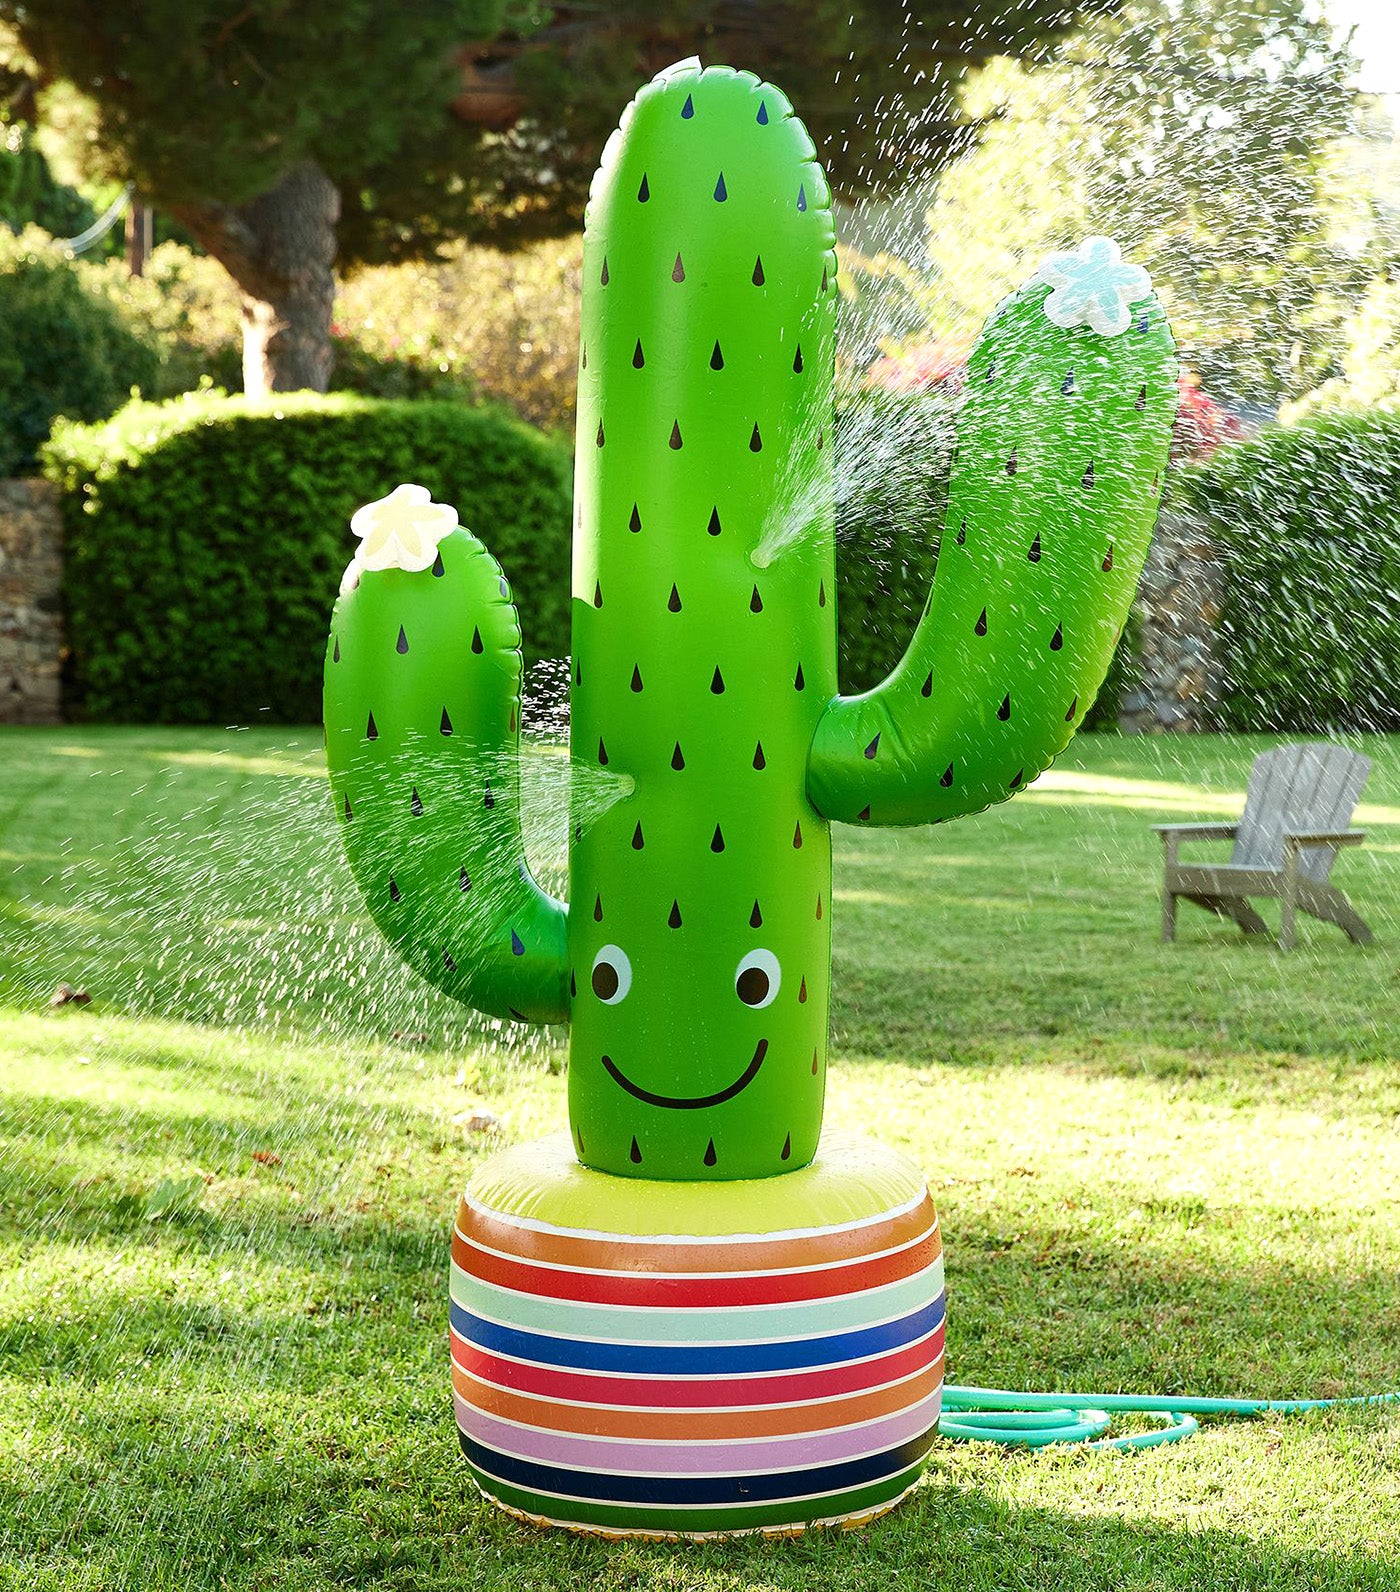 Inflatable Cactus Sprinkler